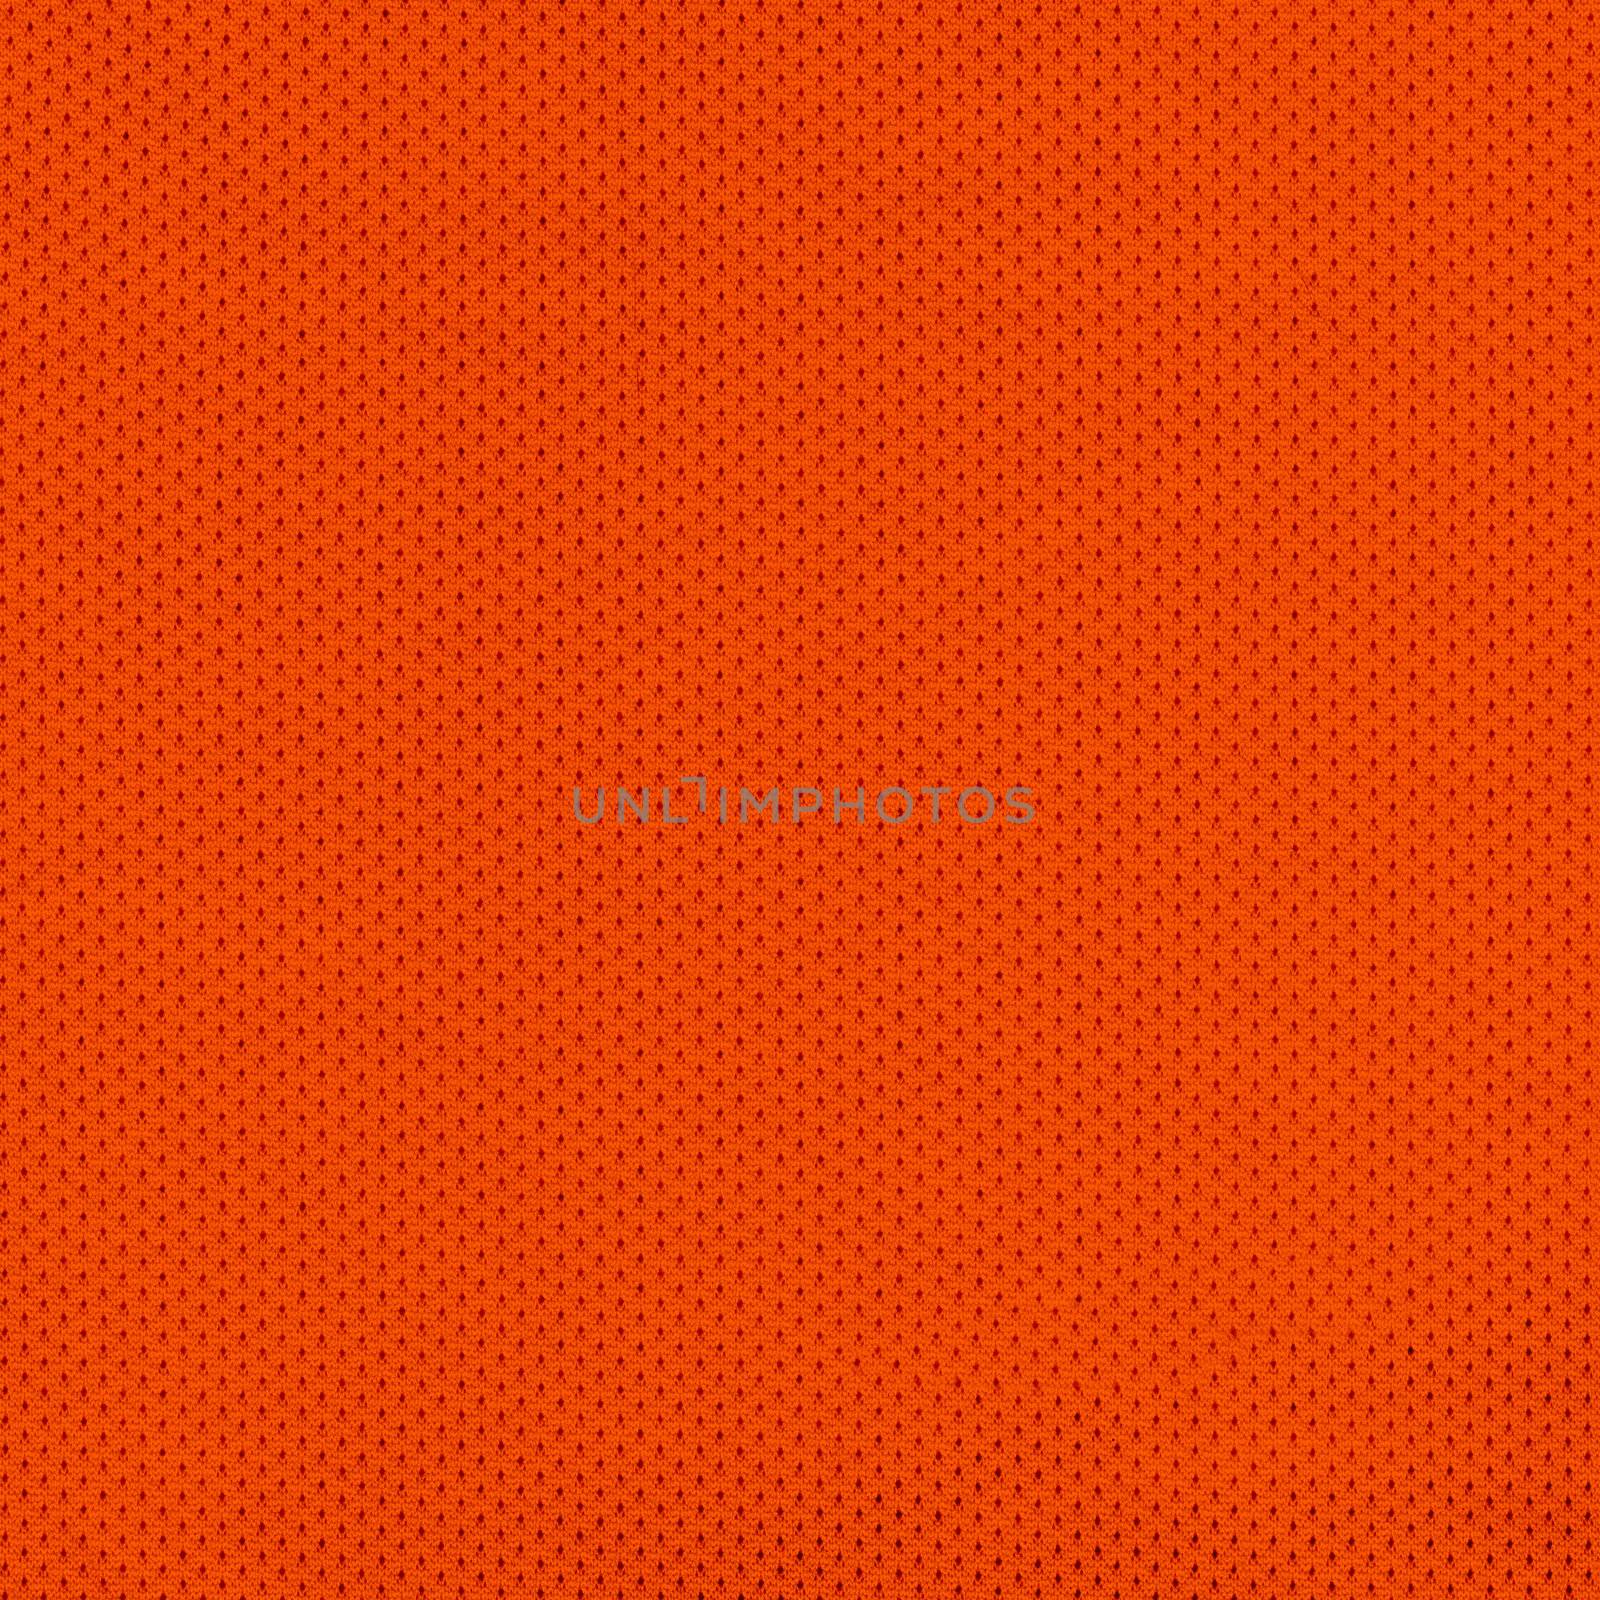 Orange Jersey Mesh by grivet